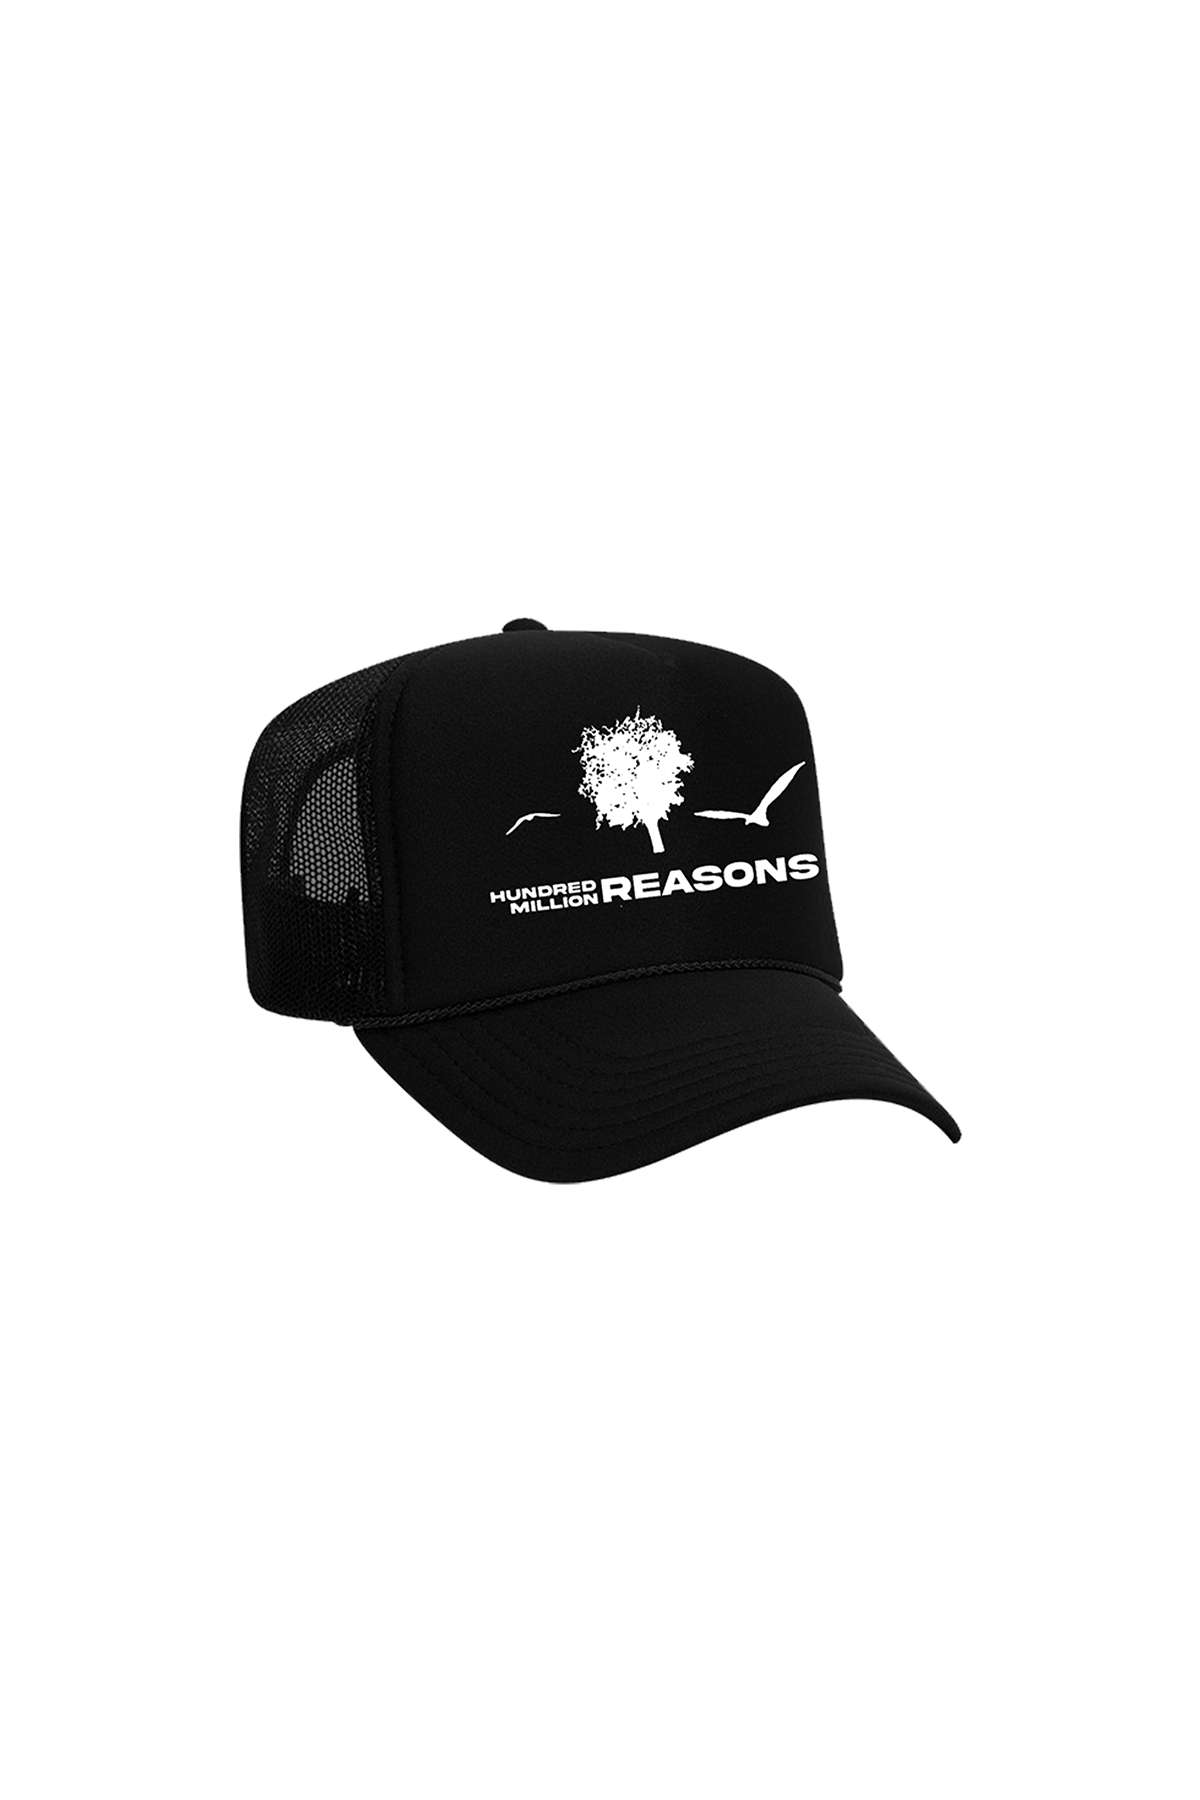 Million Reasons Trucker Hat